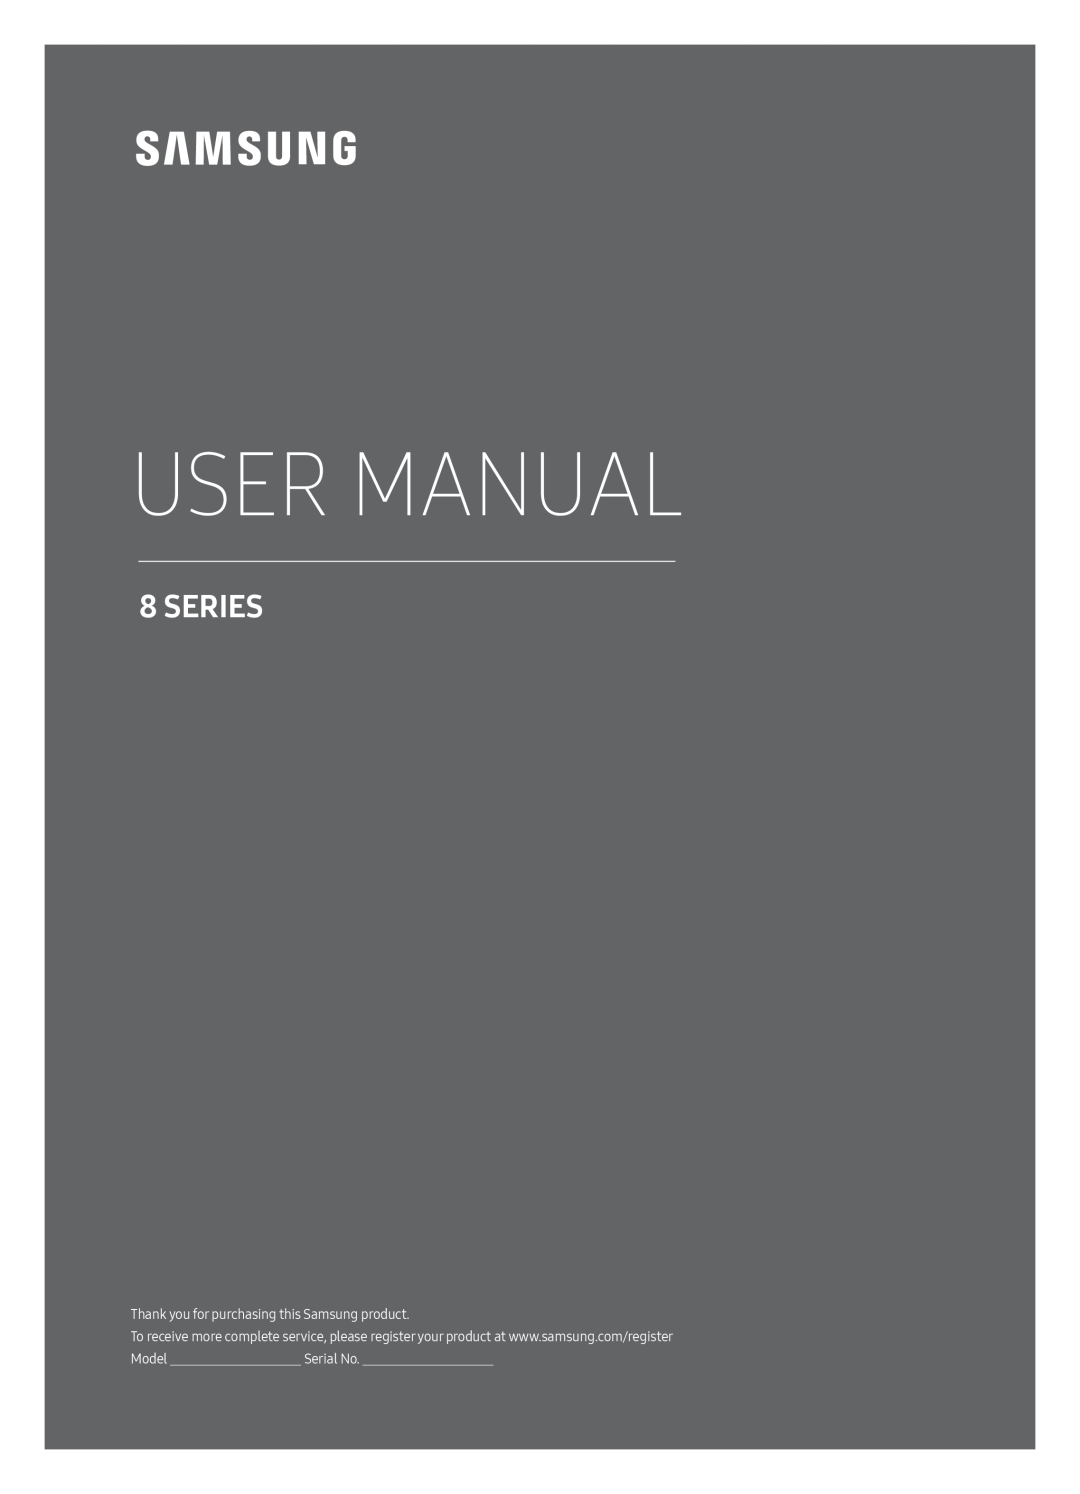 Samsung UE55MU8000TXZG manual User Manual, Series, Thank you for purchasing this Samsung product, Model, Serial No 